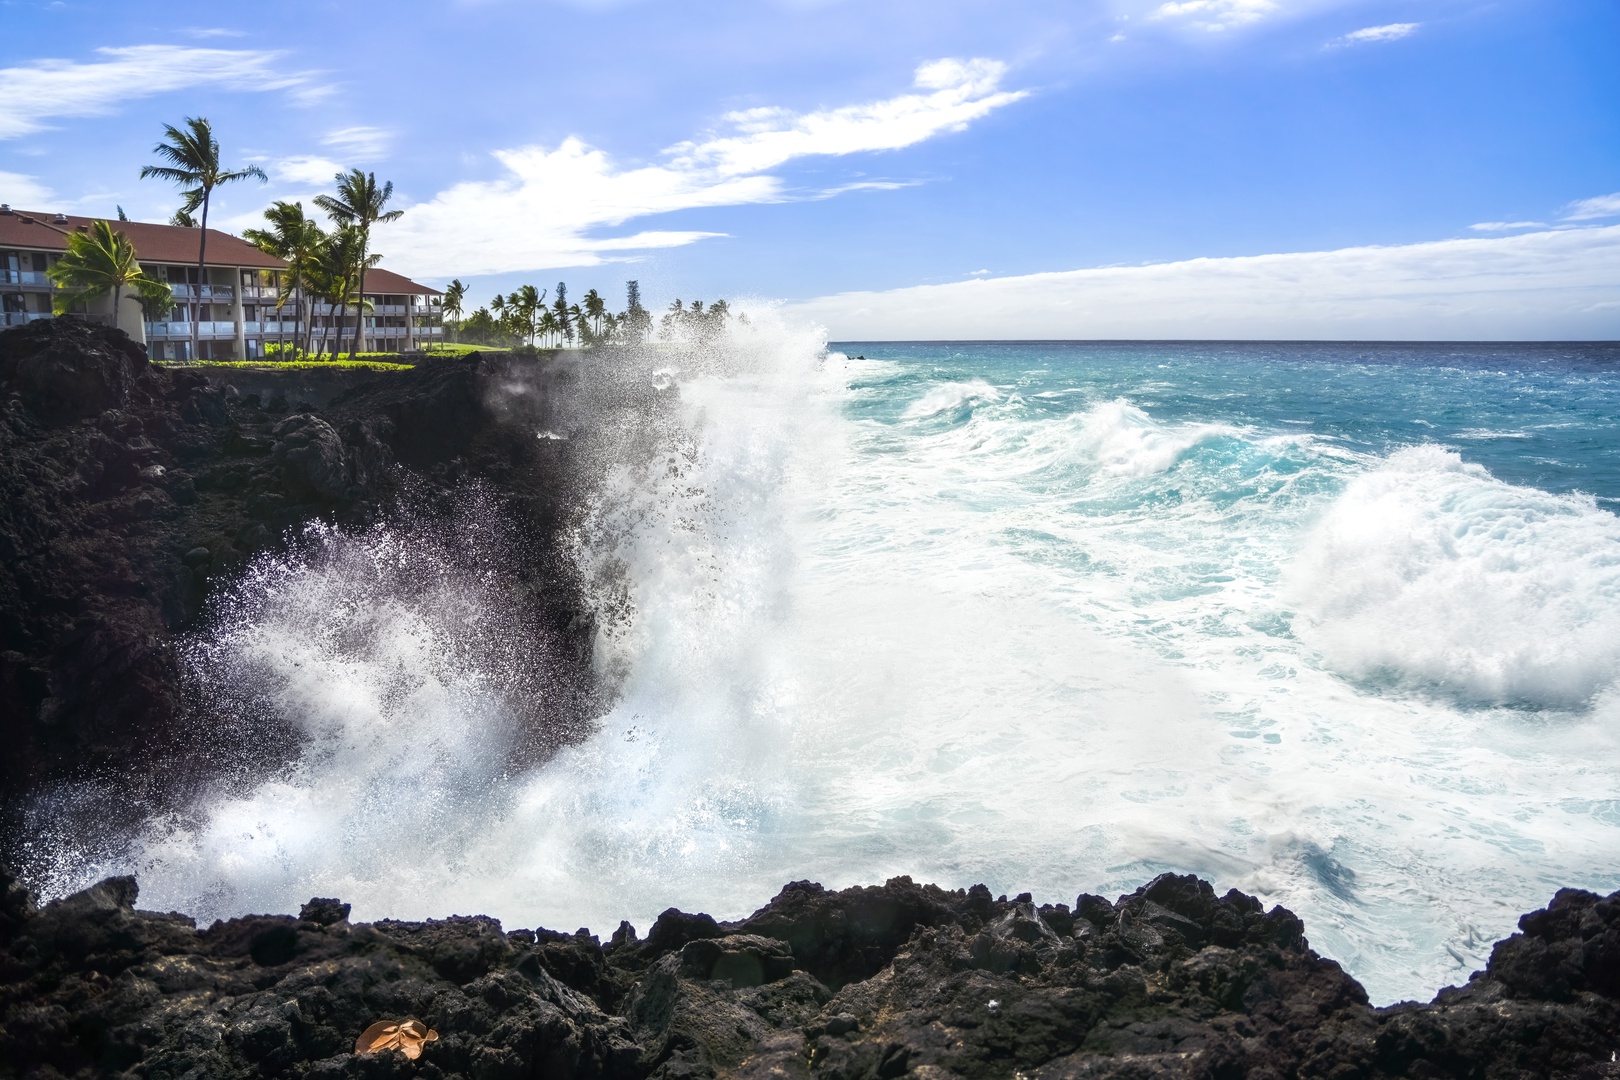 Kailua Kona Vacation Rentals, Keauhou Kona Surf & Racquet 2101 - Be amazed with nature's beauty: ocean waves crashing against the rugged cliff.